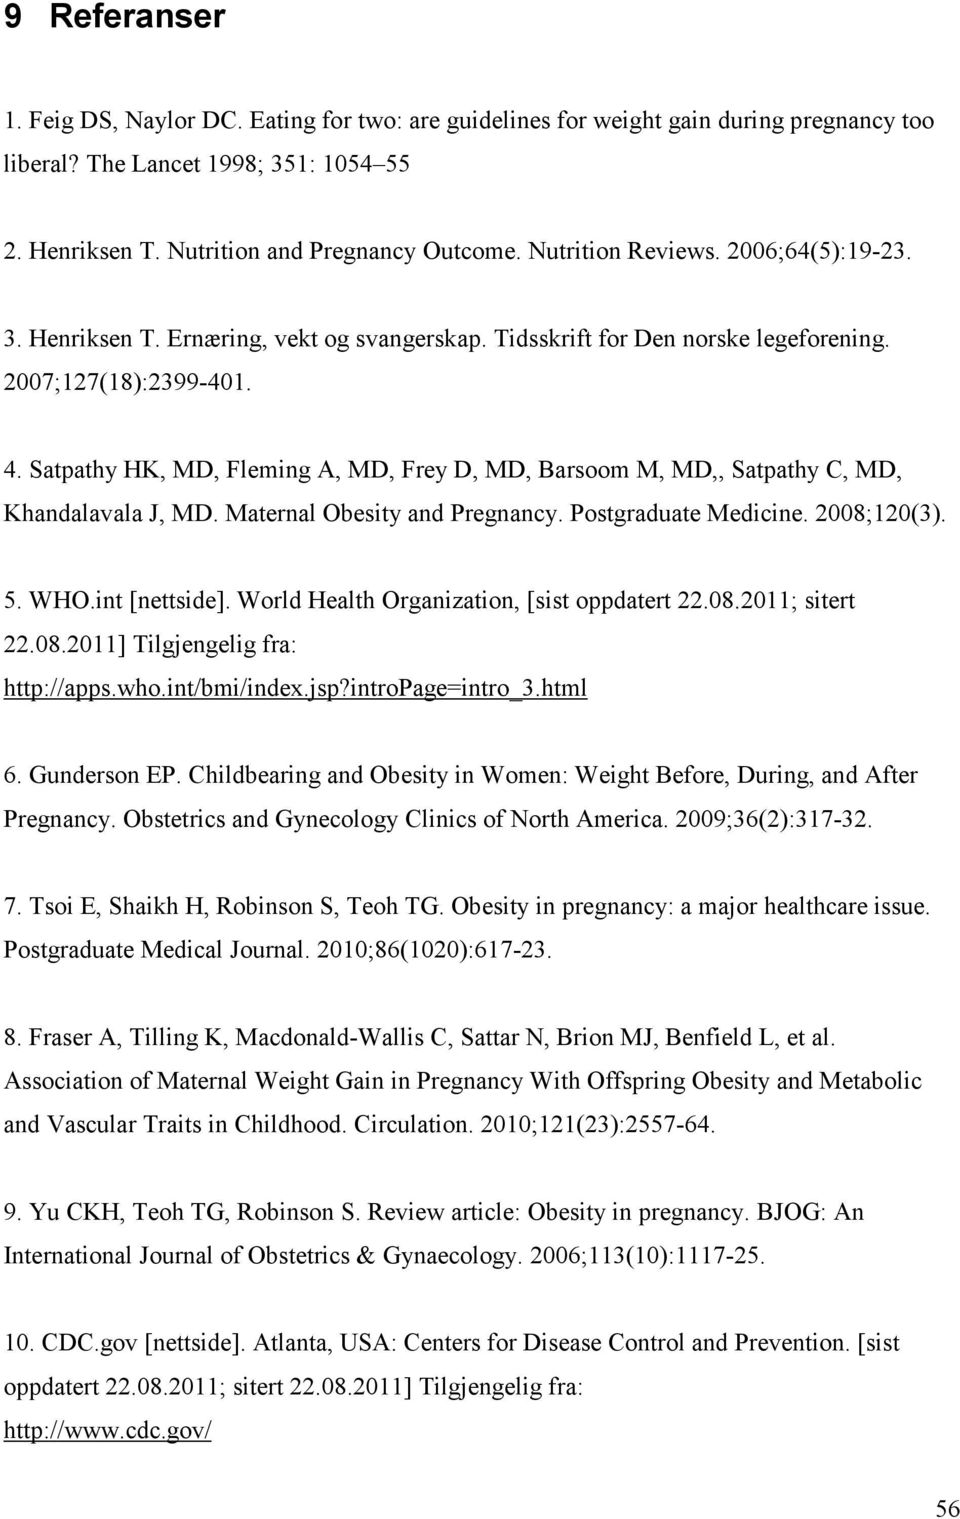 Satpathy HK, MD, Fleming A, MD, Frey D, MD, Barsoom M, MD,, Satpathy C, MD, Khandalavala J, MD. Maternal Obesity and Pregnancy. Postgraduate Medicine. 2008;120(3). 5. WHO.int [nettside].